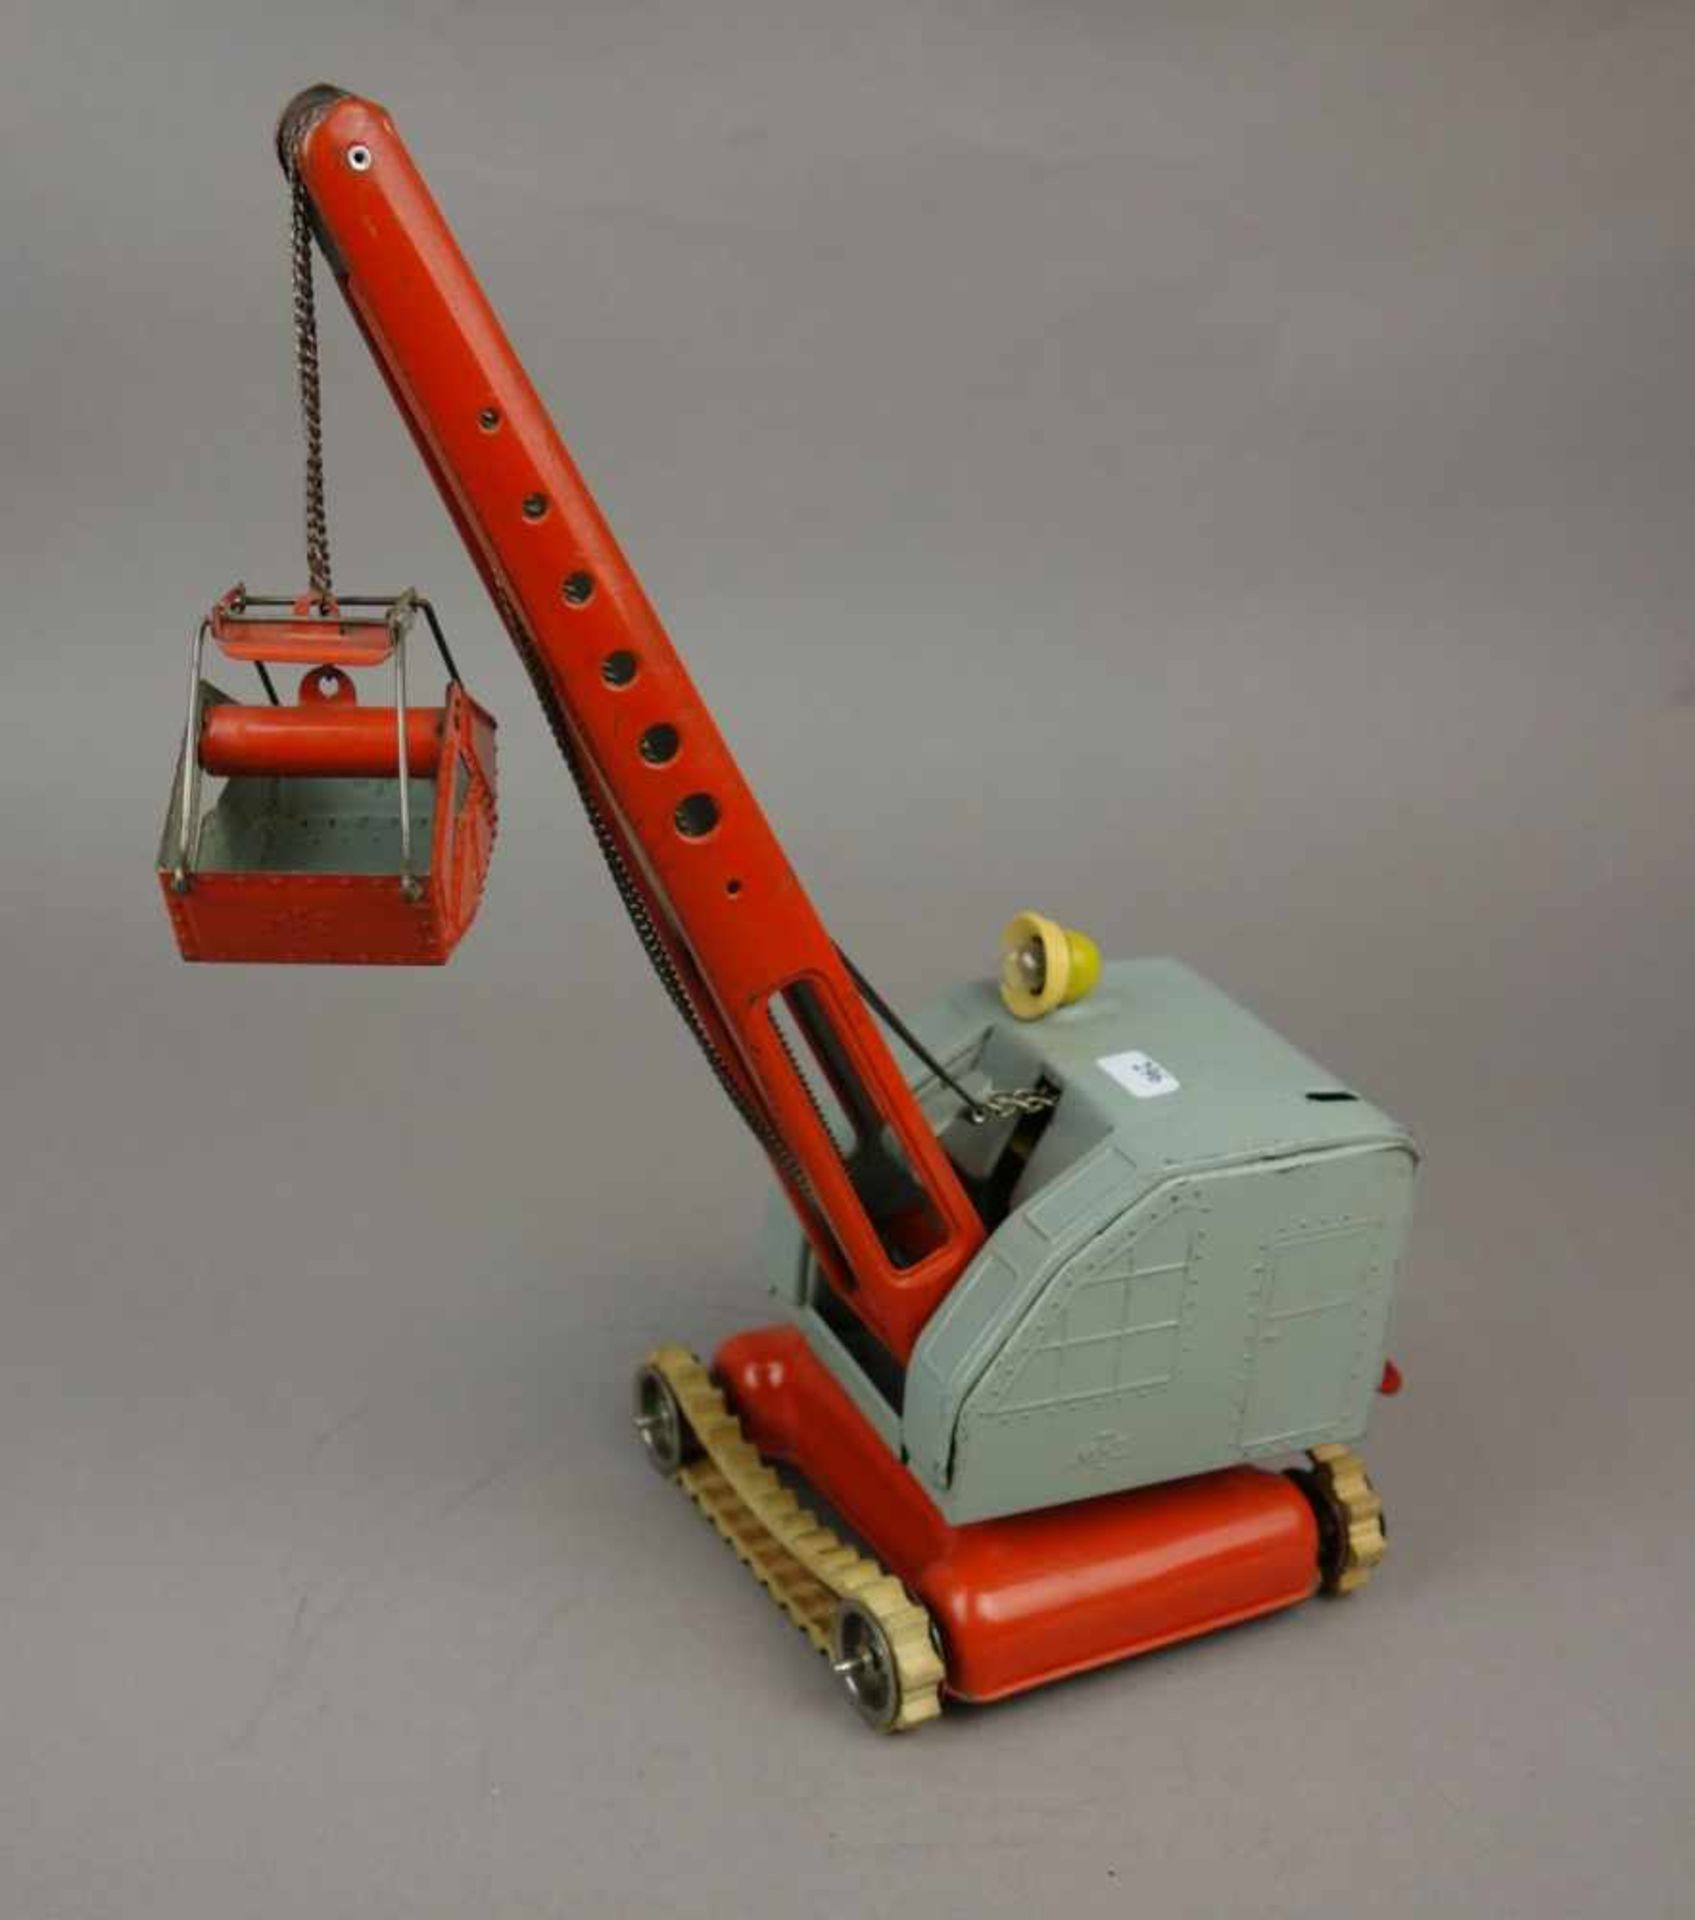 BLECHSPIELZEUG: RAUPENBAGGER / toy crane crawler excavator, 20. Jh., Manufaktur MFZ - Martin